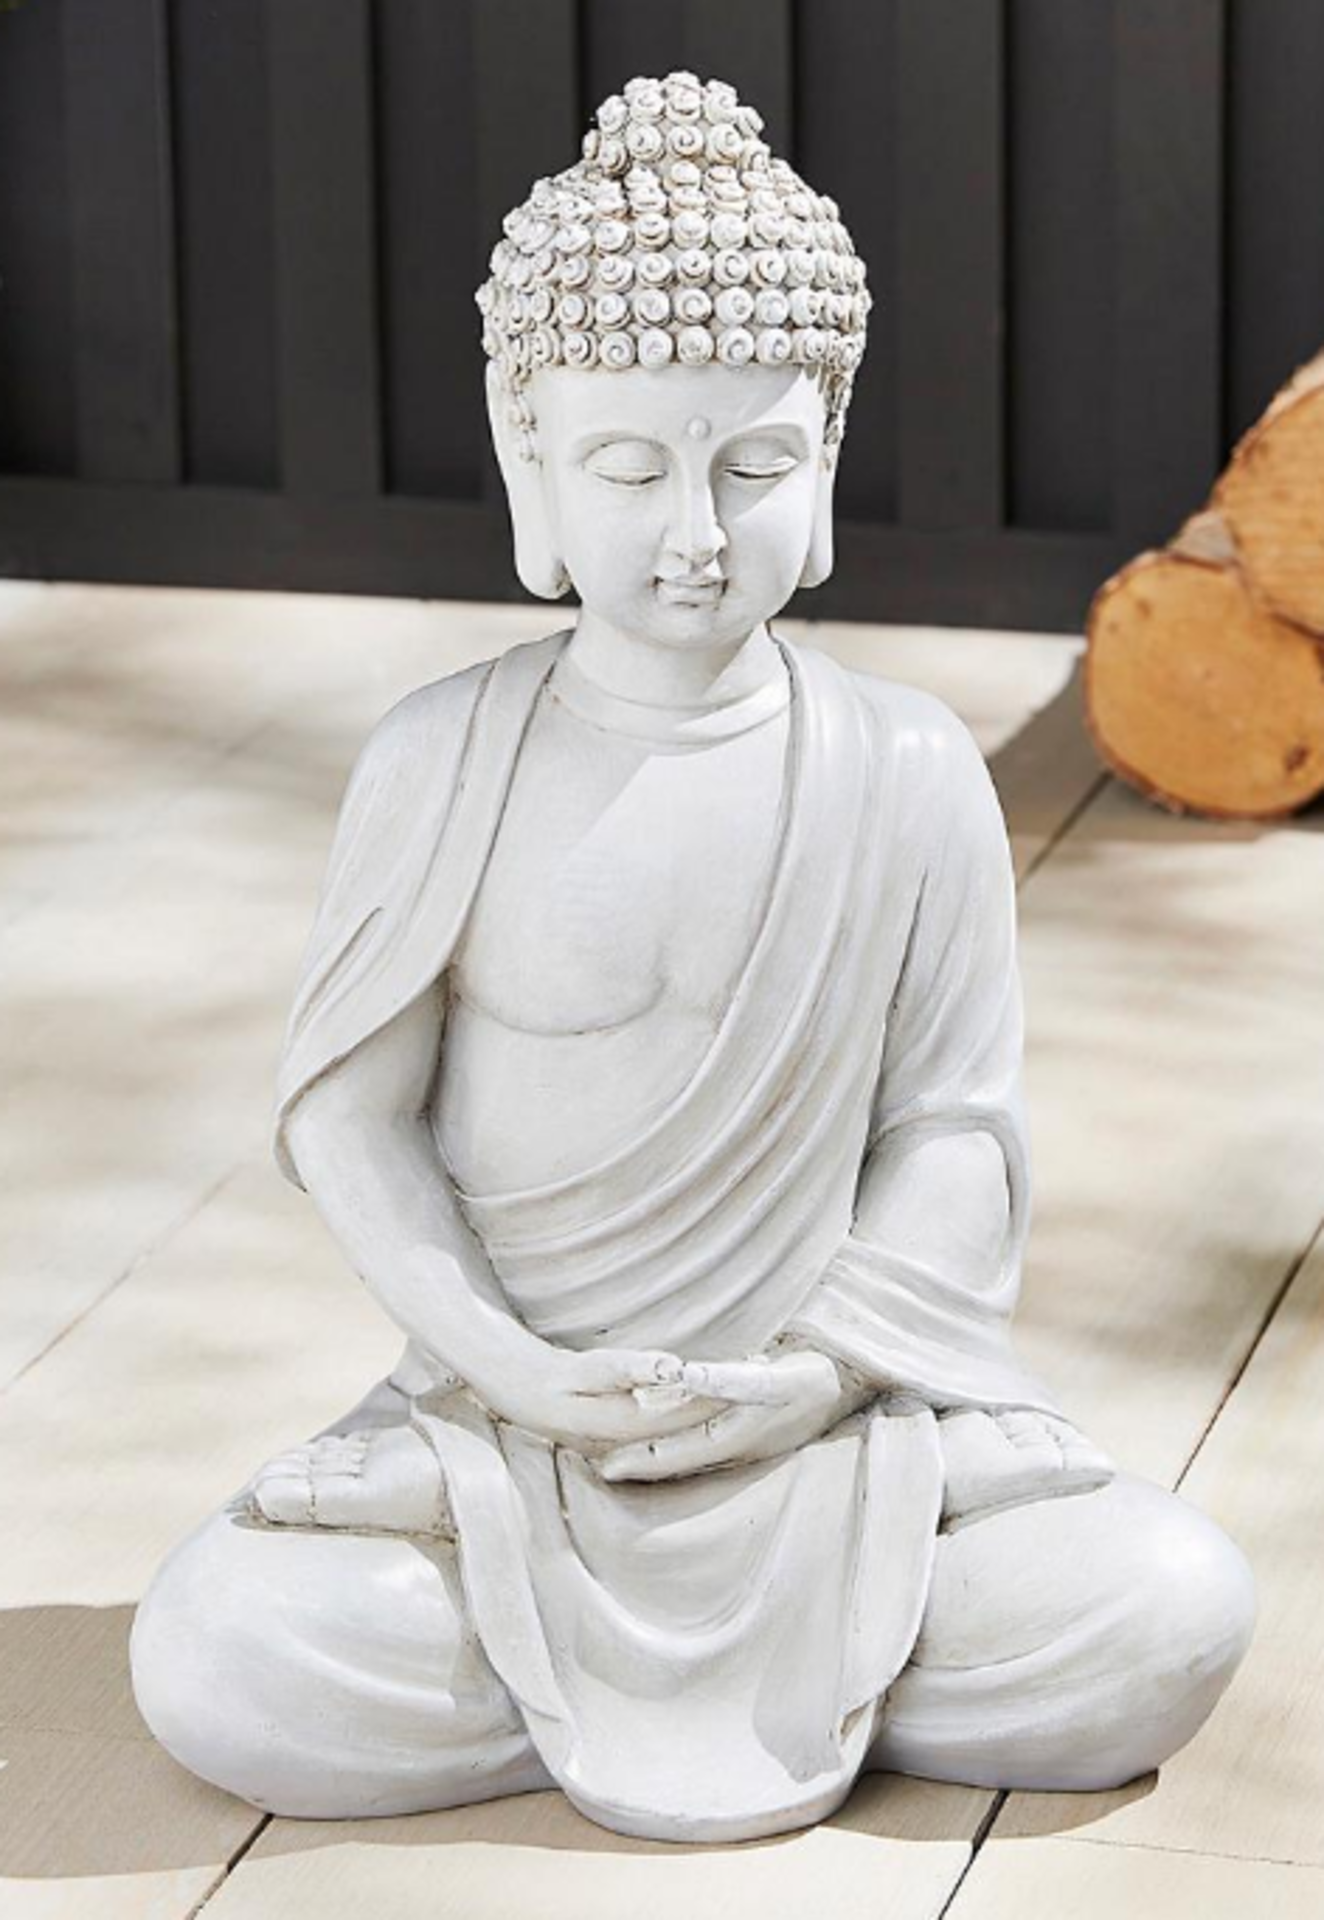 Sitting Buddha Garden Ornemant - ER22